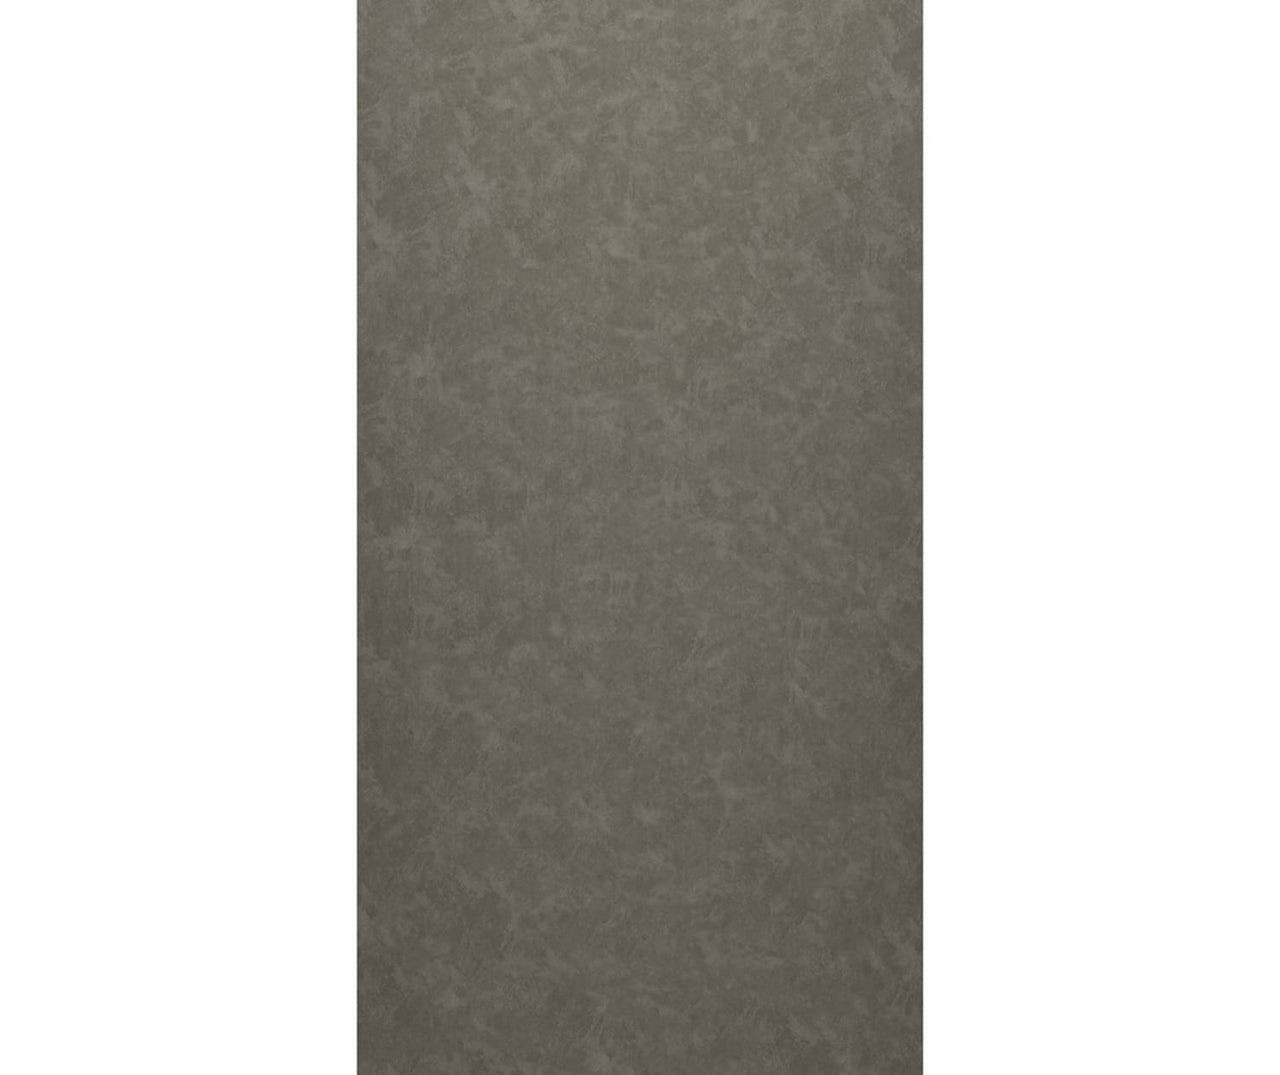 SMMK-7238-1 38 x 72 Swanstone Smooth Tile Glue up Bathtub and Shower Single Wall Panel  - BNGBath